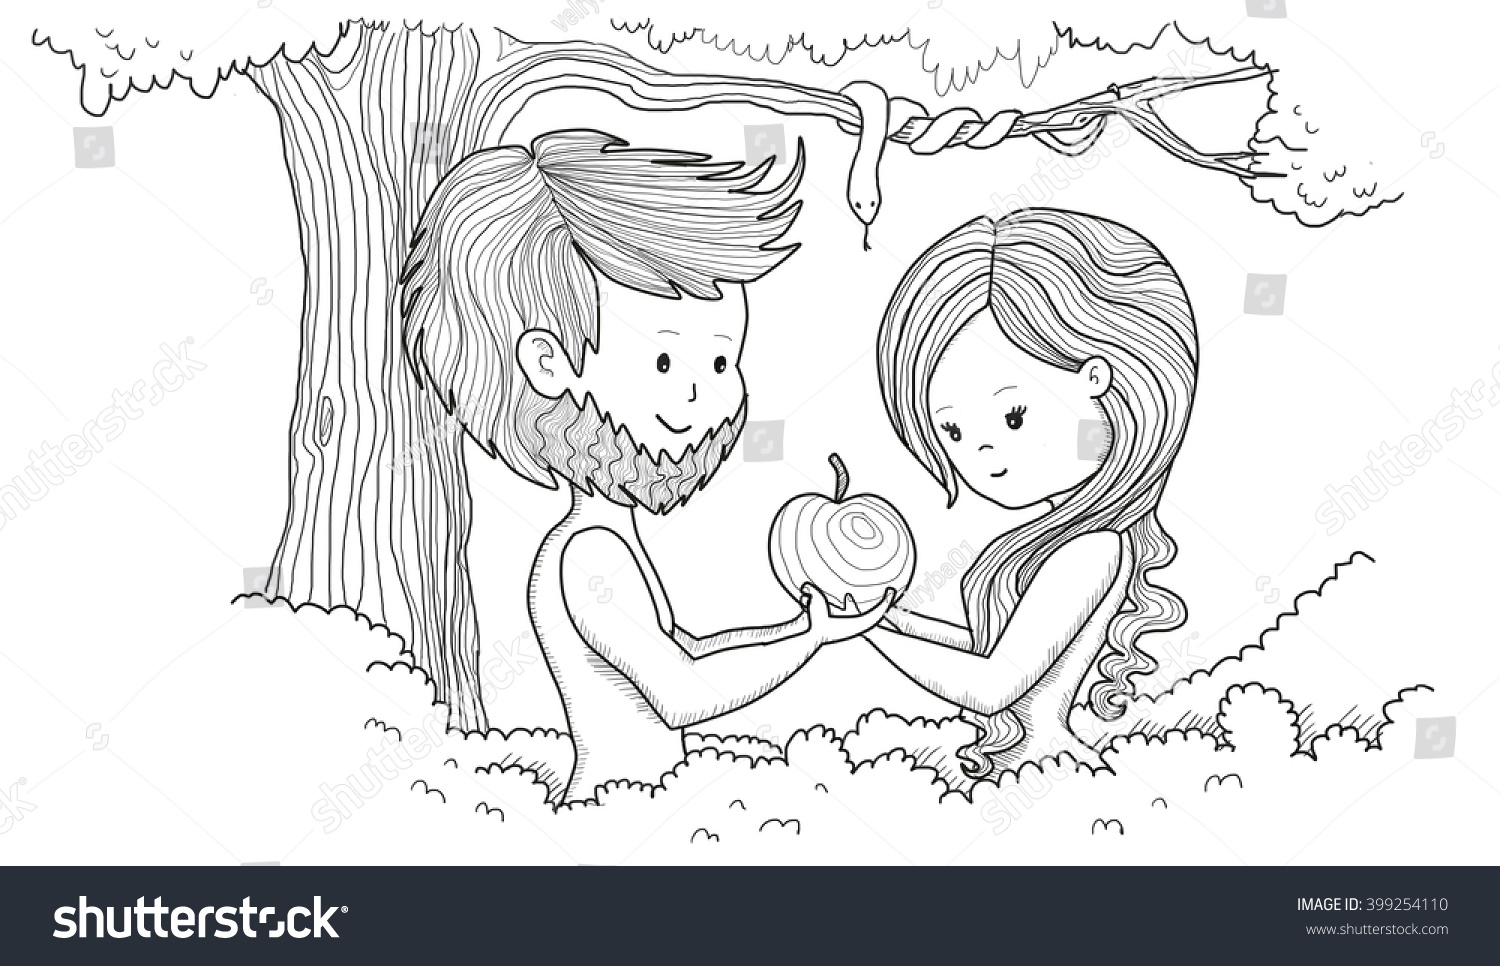 Адам и ева яблоко рисунок